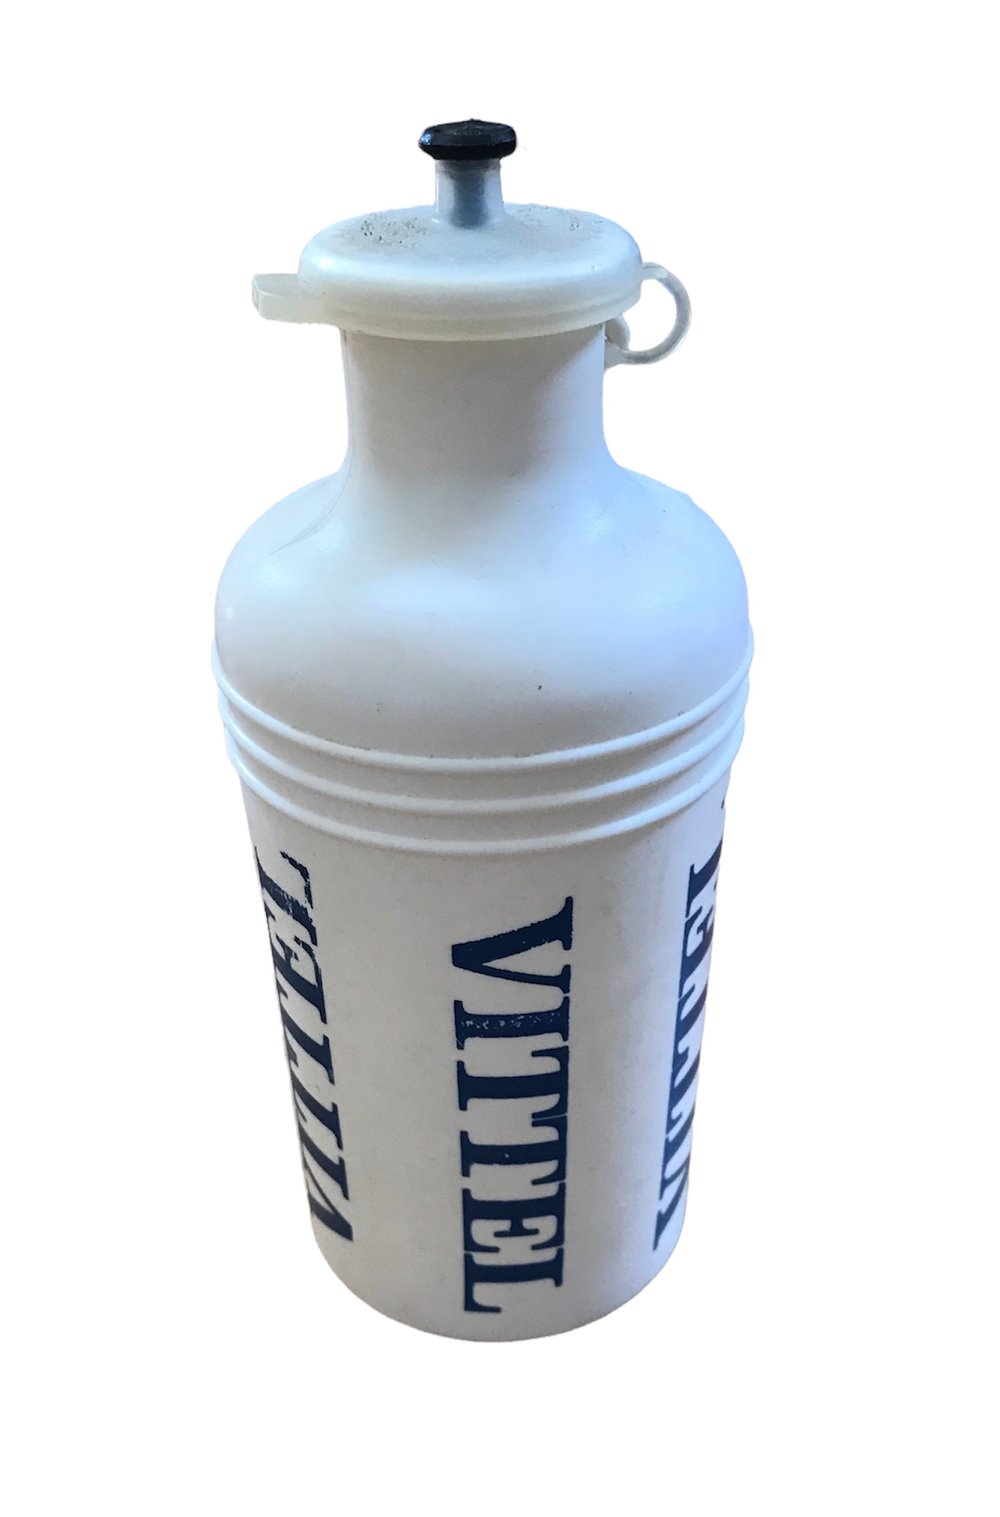 1970 - Tour de France / Vittel water bottle